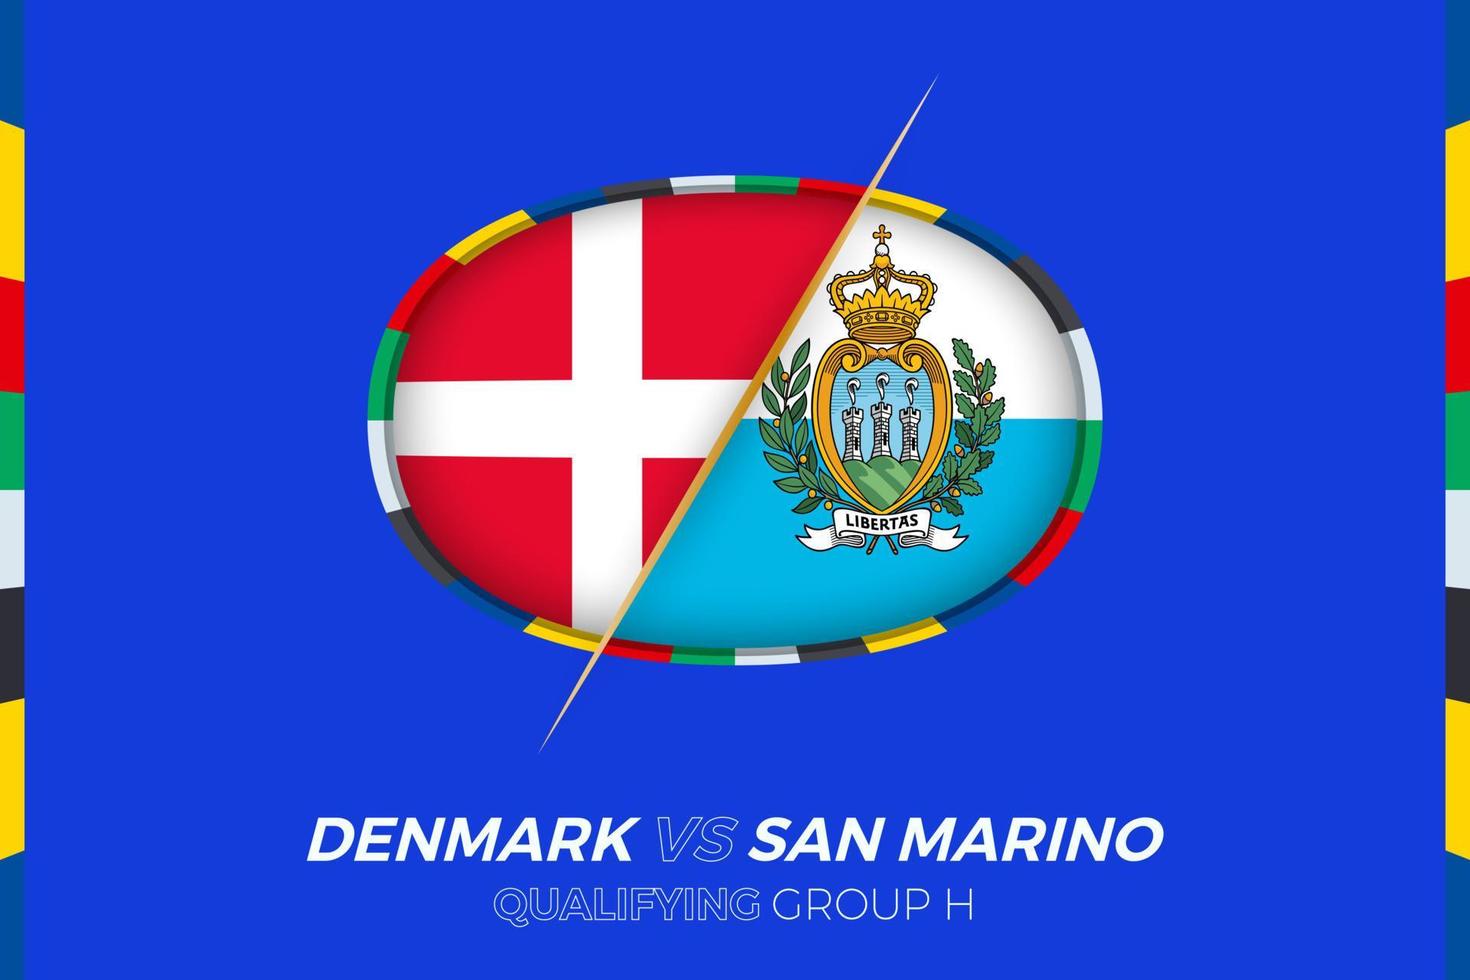 Danmark mot san marino ikon för europeisk fotboll turnering kompetens, grupp h. vektor